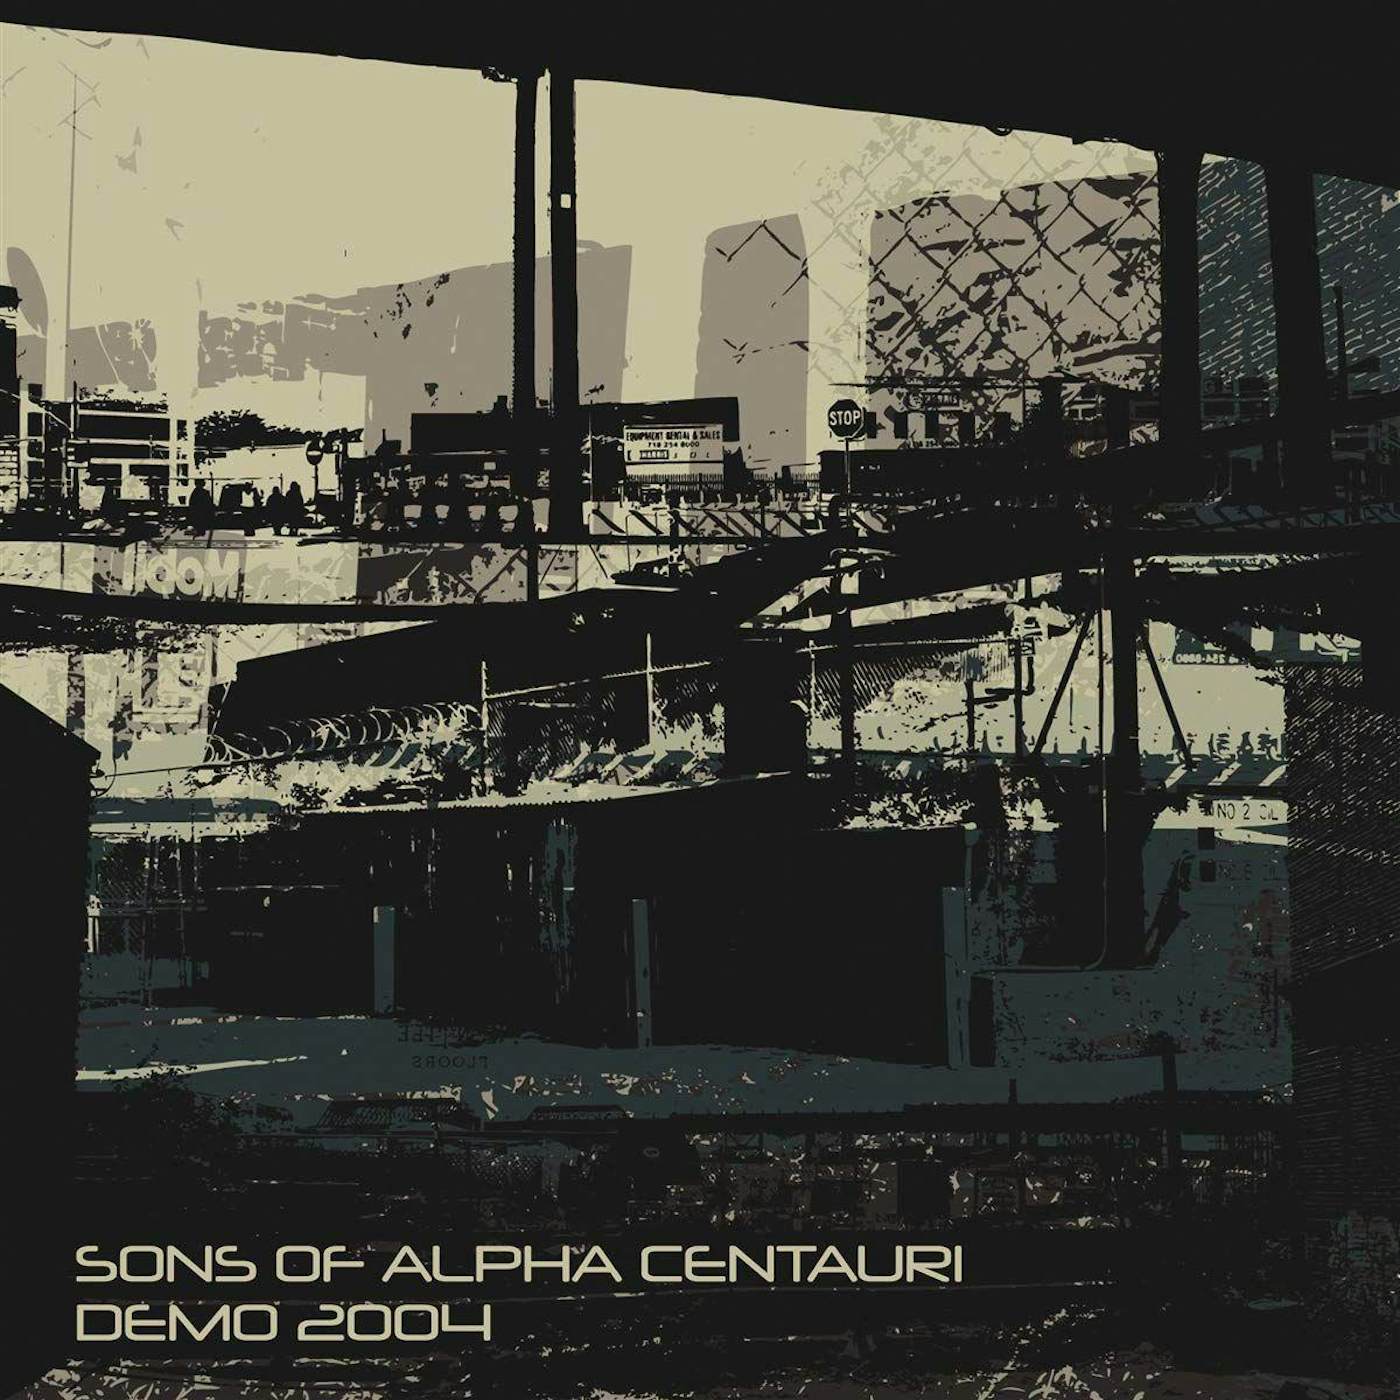 Sons of Alpha Centauri Demo 2004 Vinyl Record